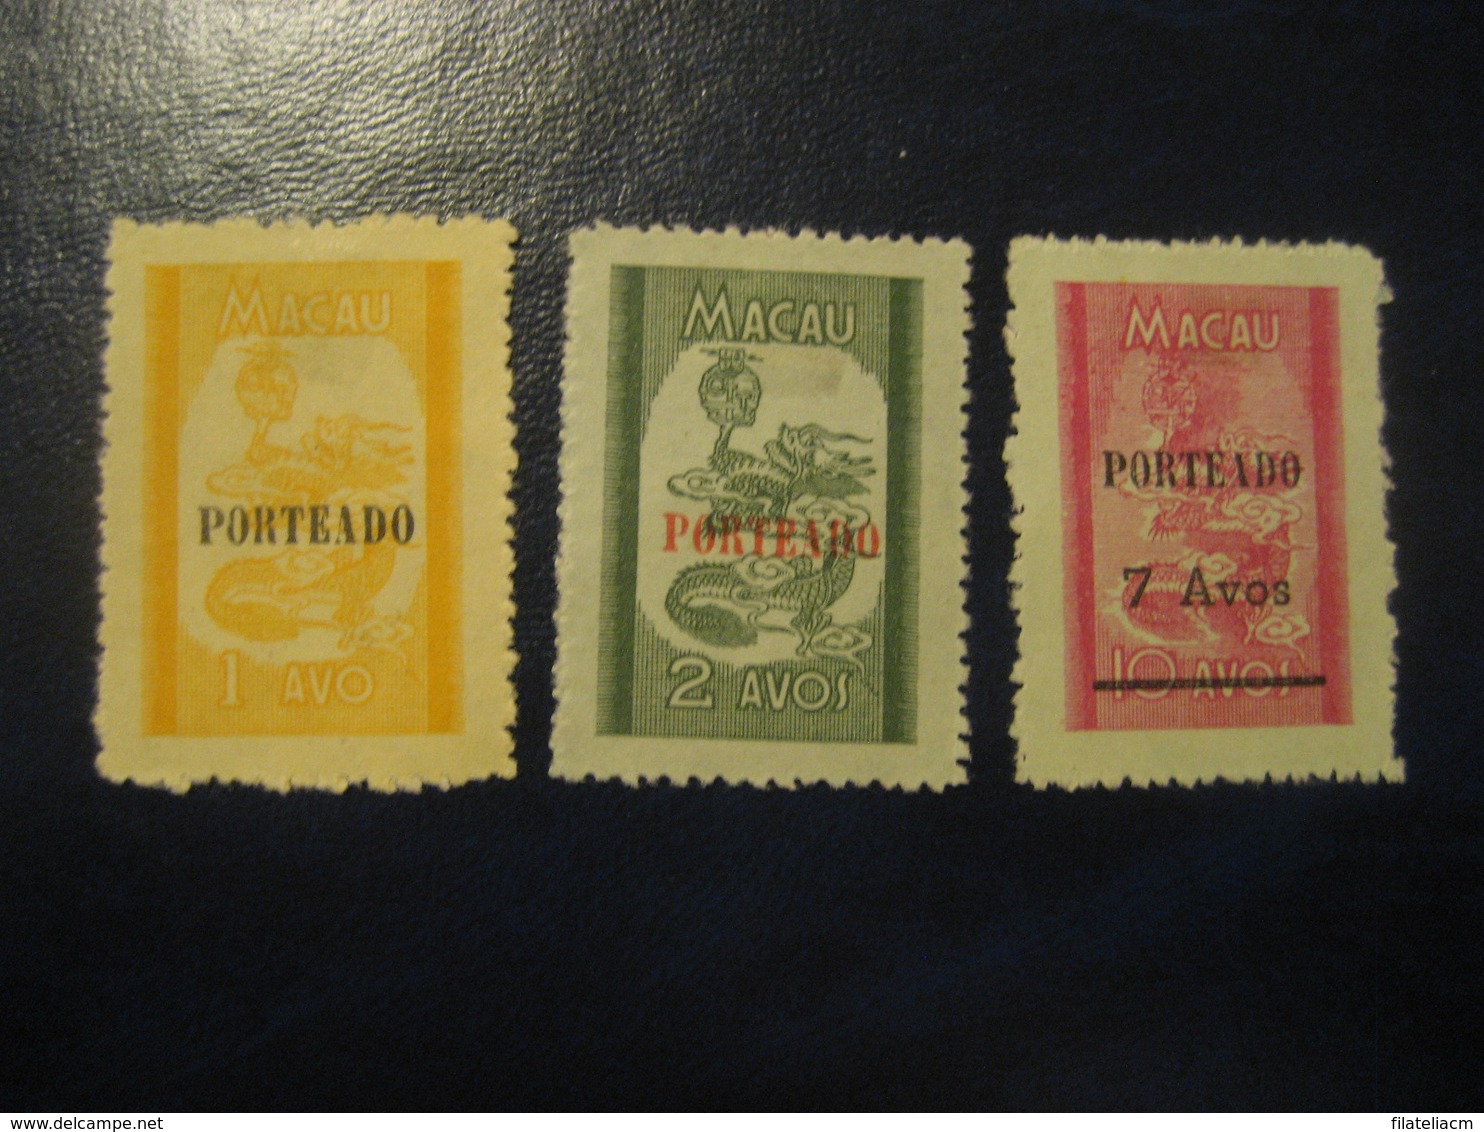 MACAU 1951 Tax Taxe Yvert 53/5 * Hinged No Gum Porteado Overprinted (Cat 2008 6,75 Eur) Macao China Portugal Area - Postage Due